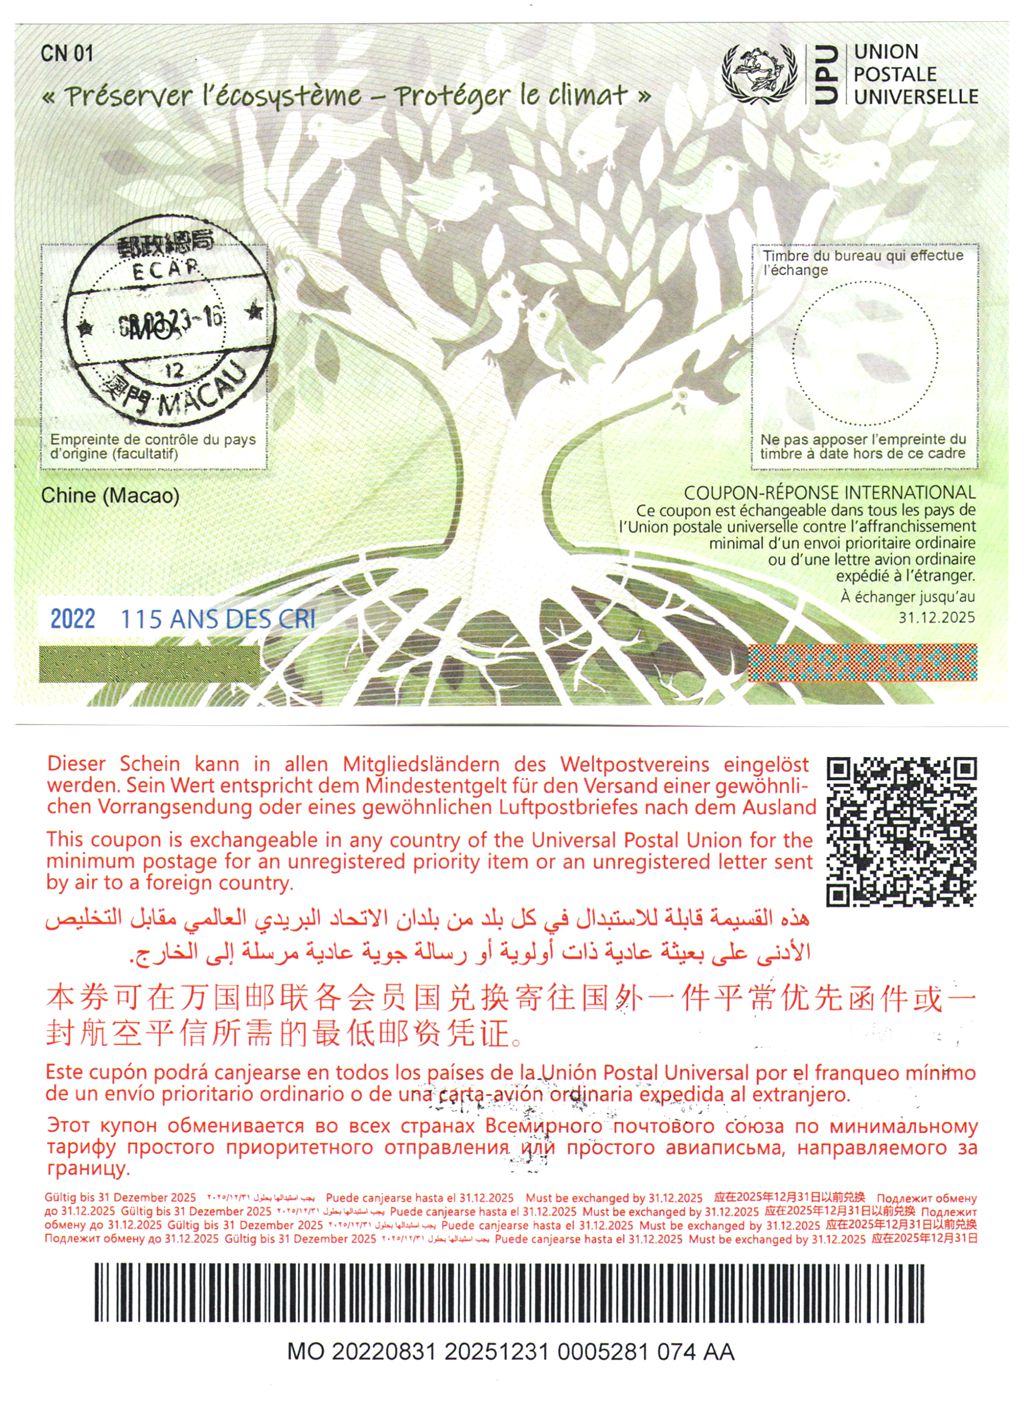 M9170, International Reply Coupon (IRC), Macau， China, 2022 Issue